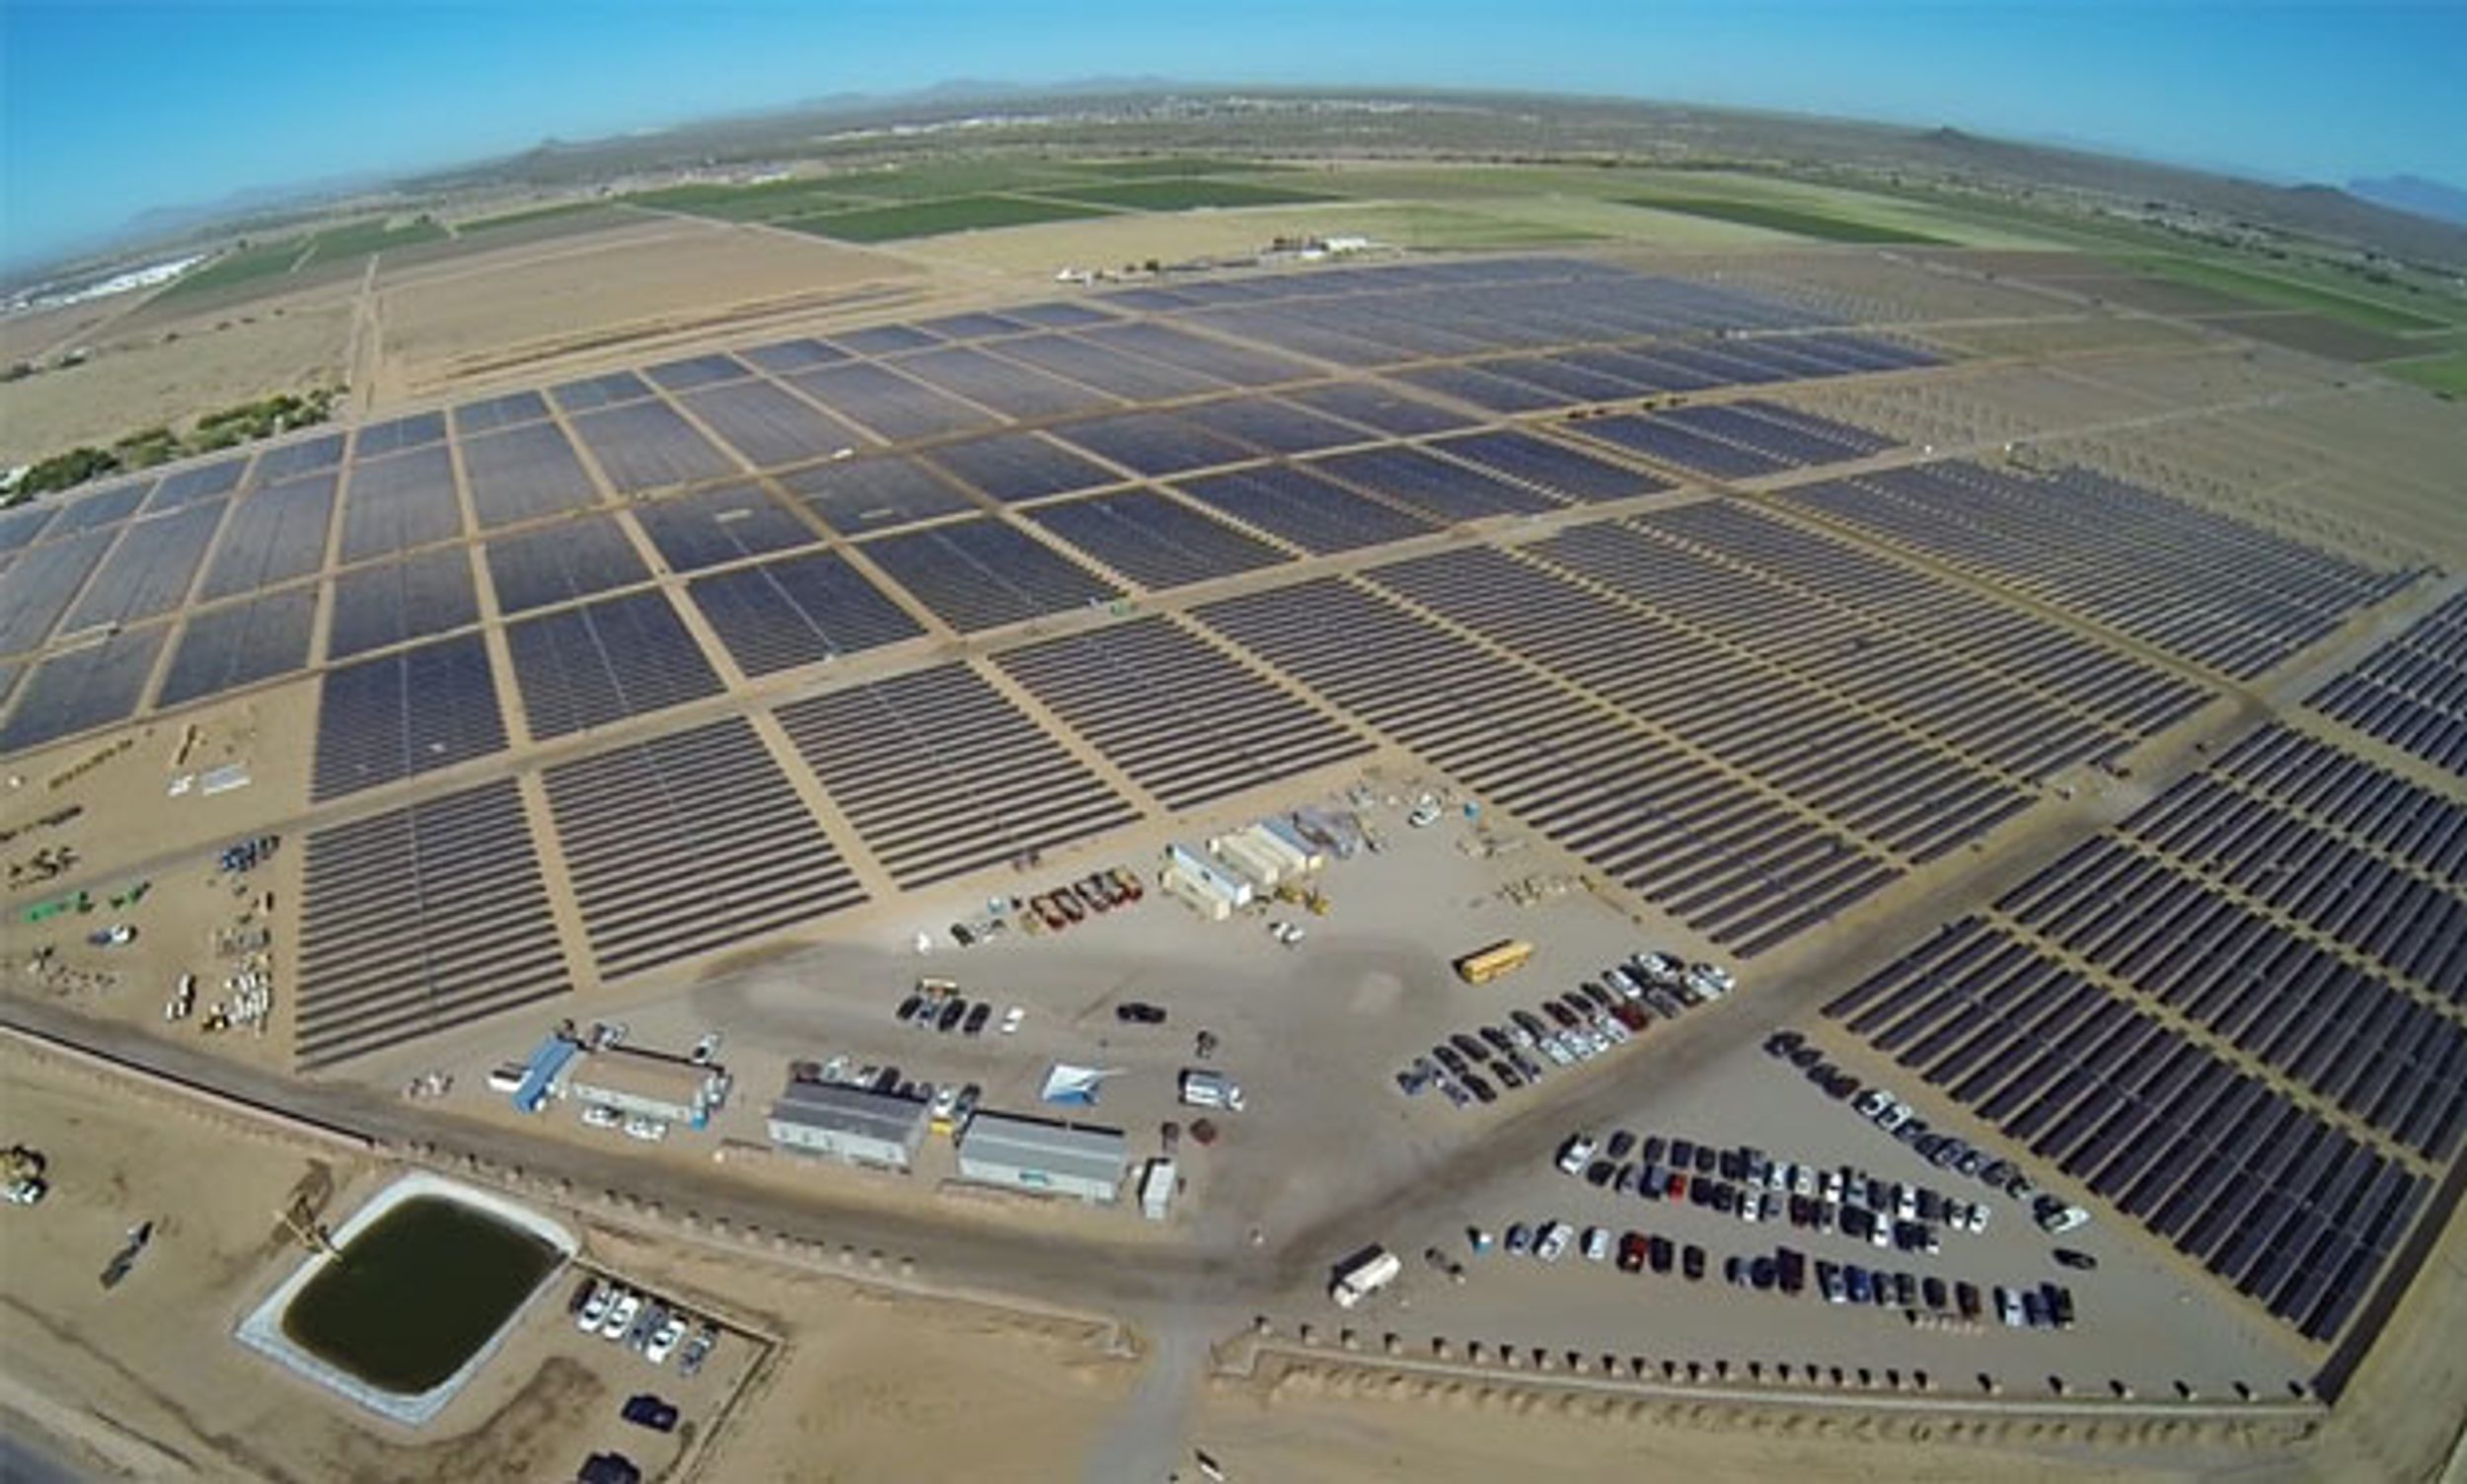 Image of the solar panels at a solar farm in Arizona.